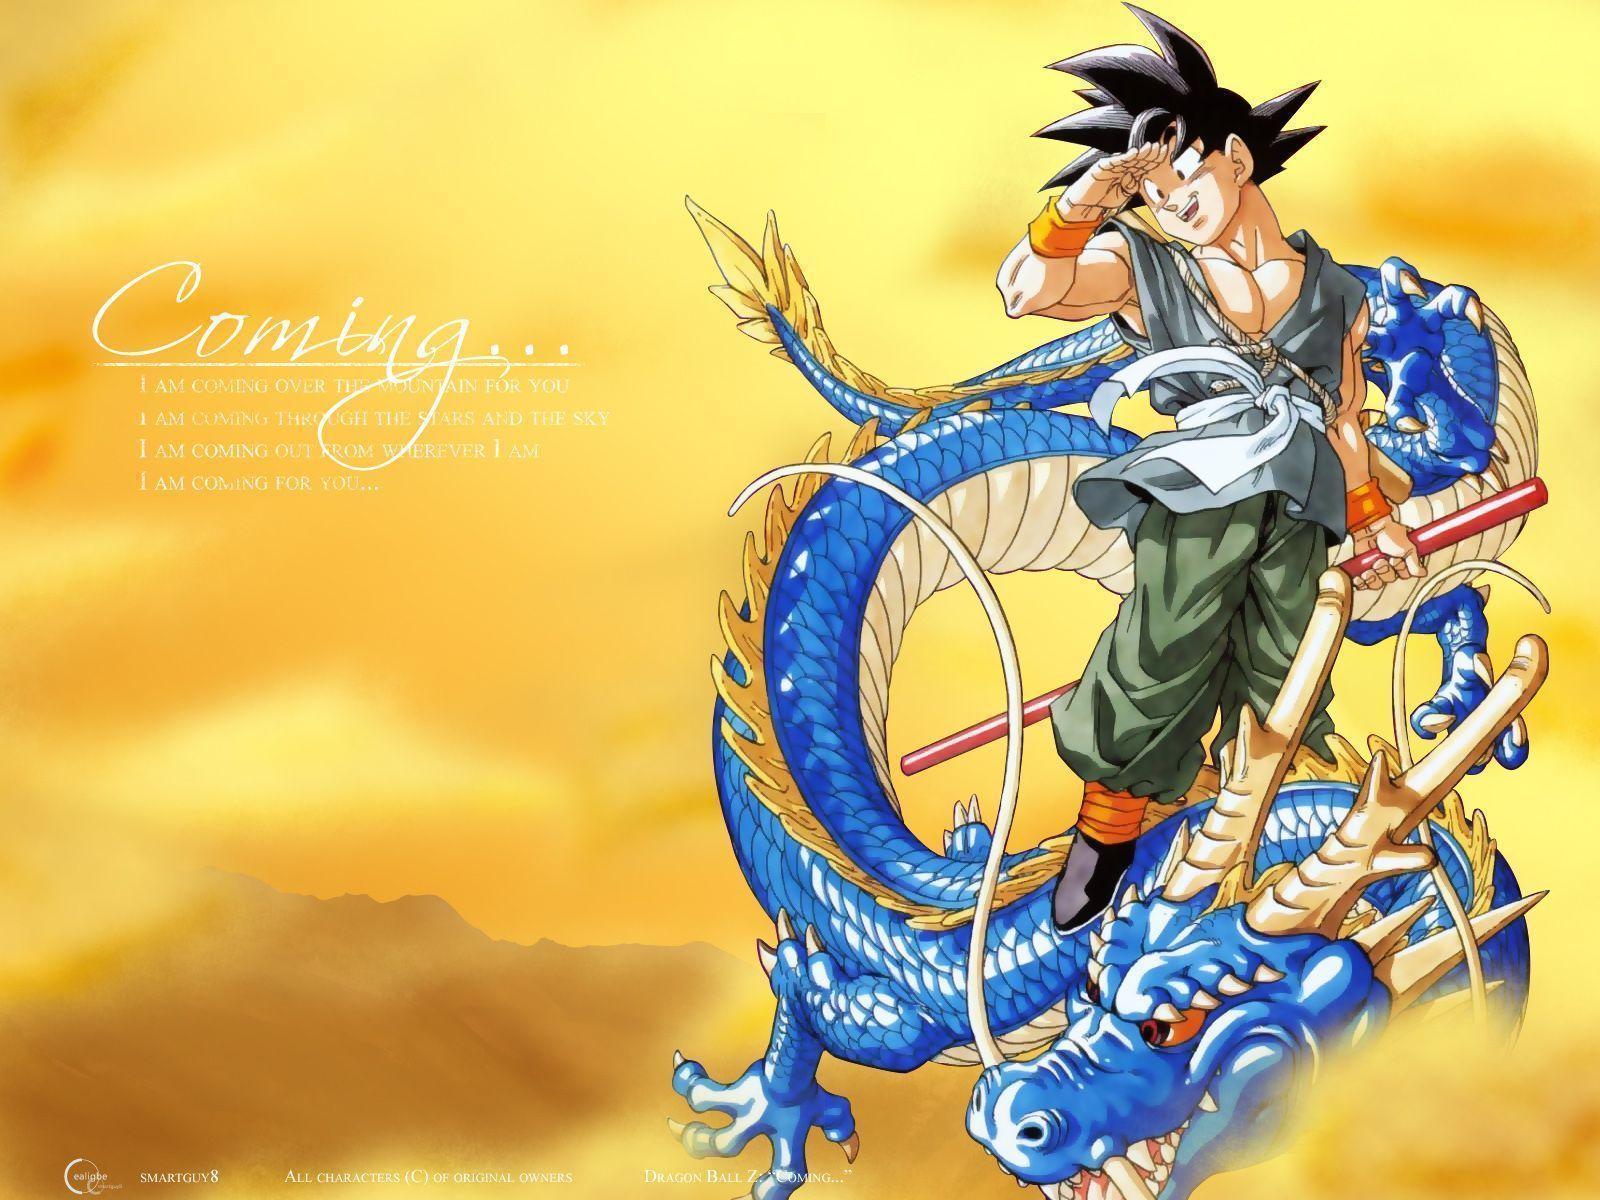 image For > Goku Wallpaper For Desktop